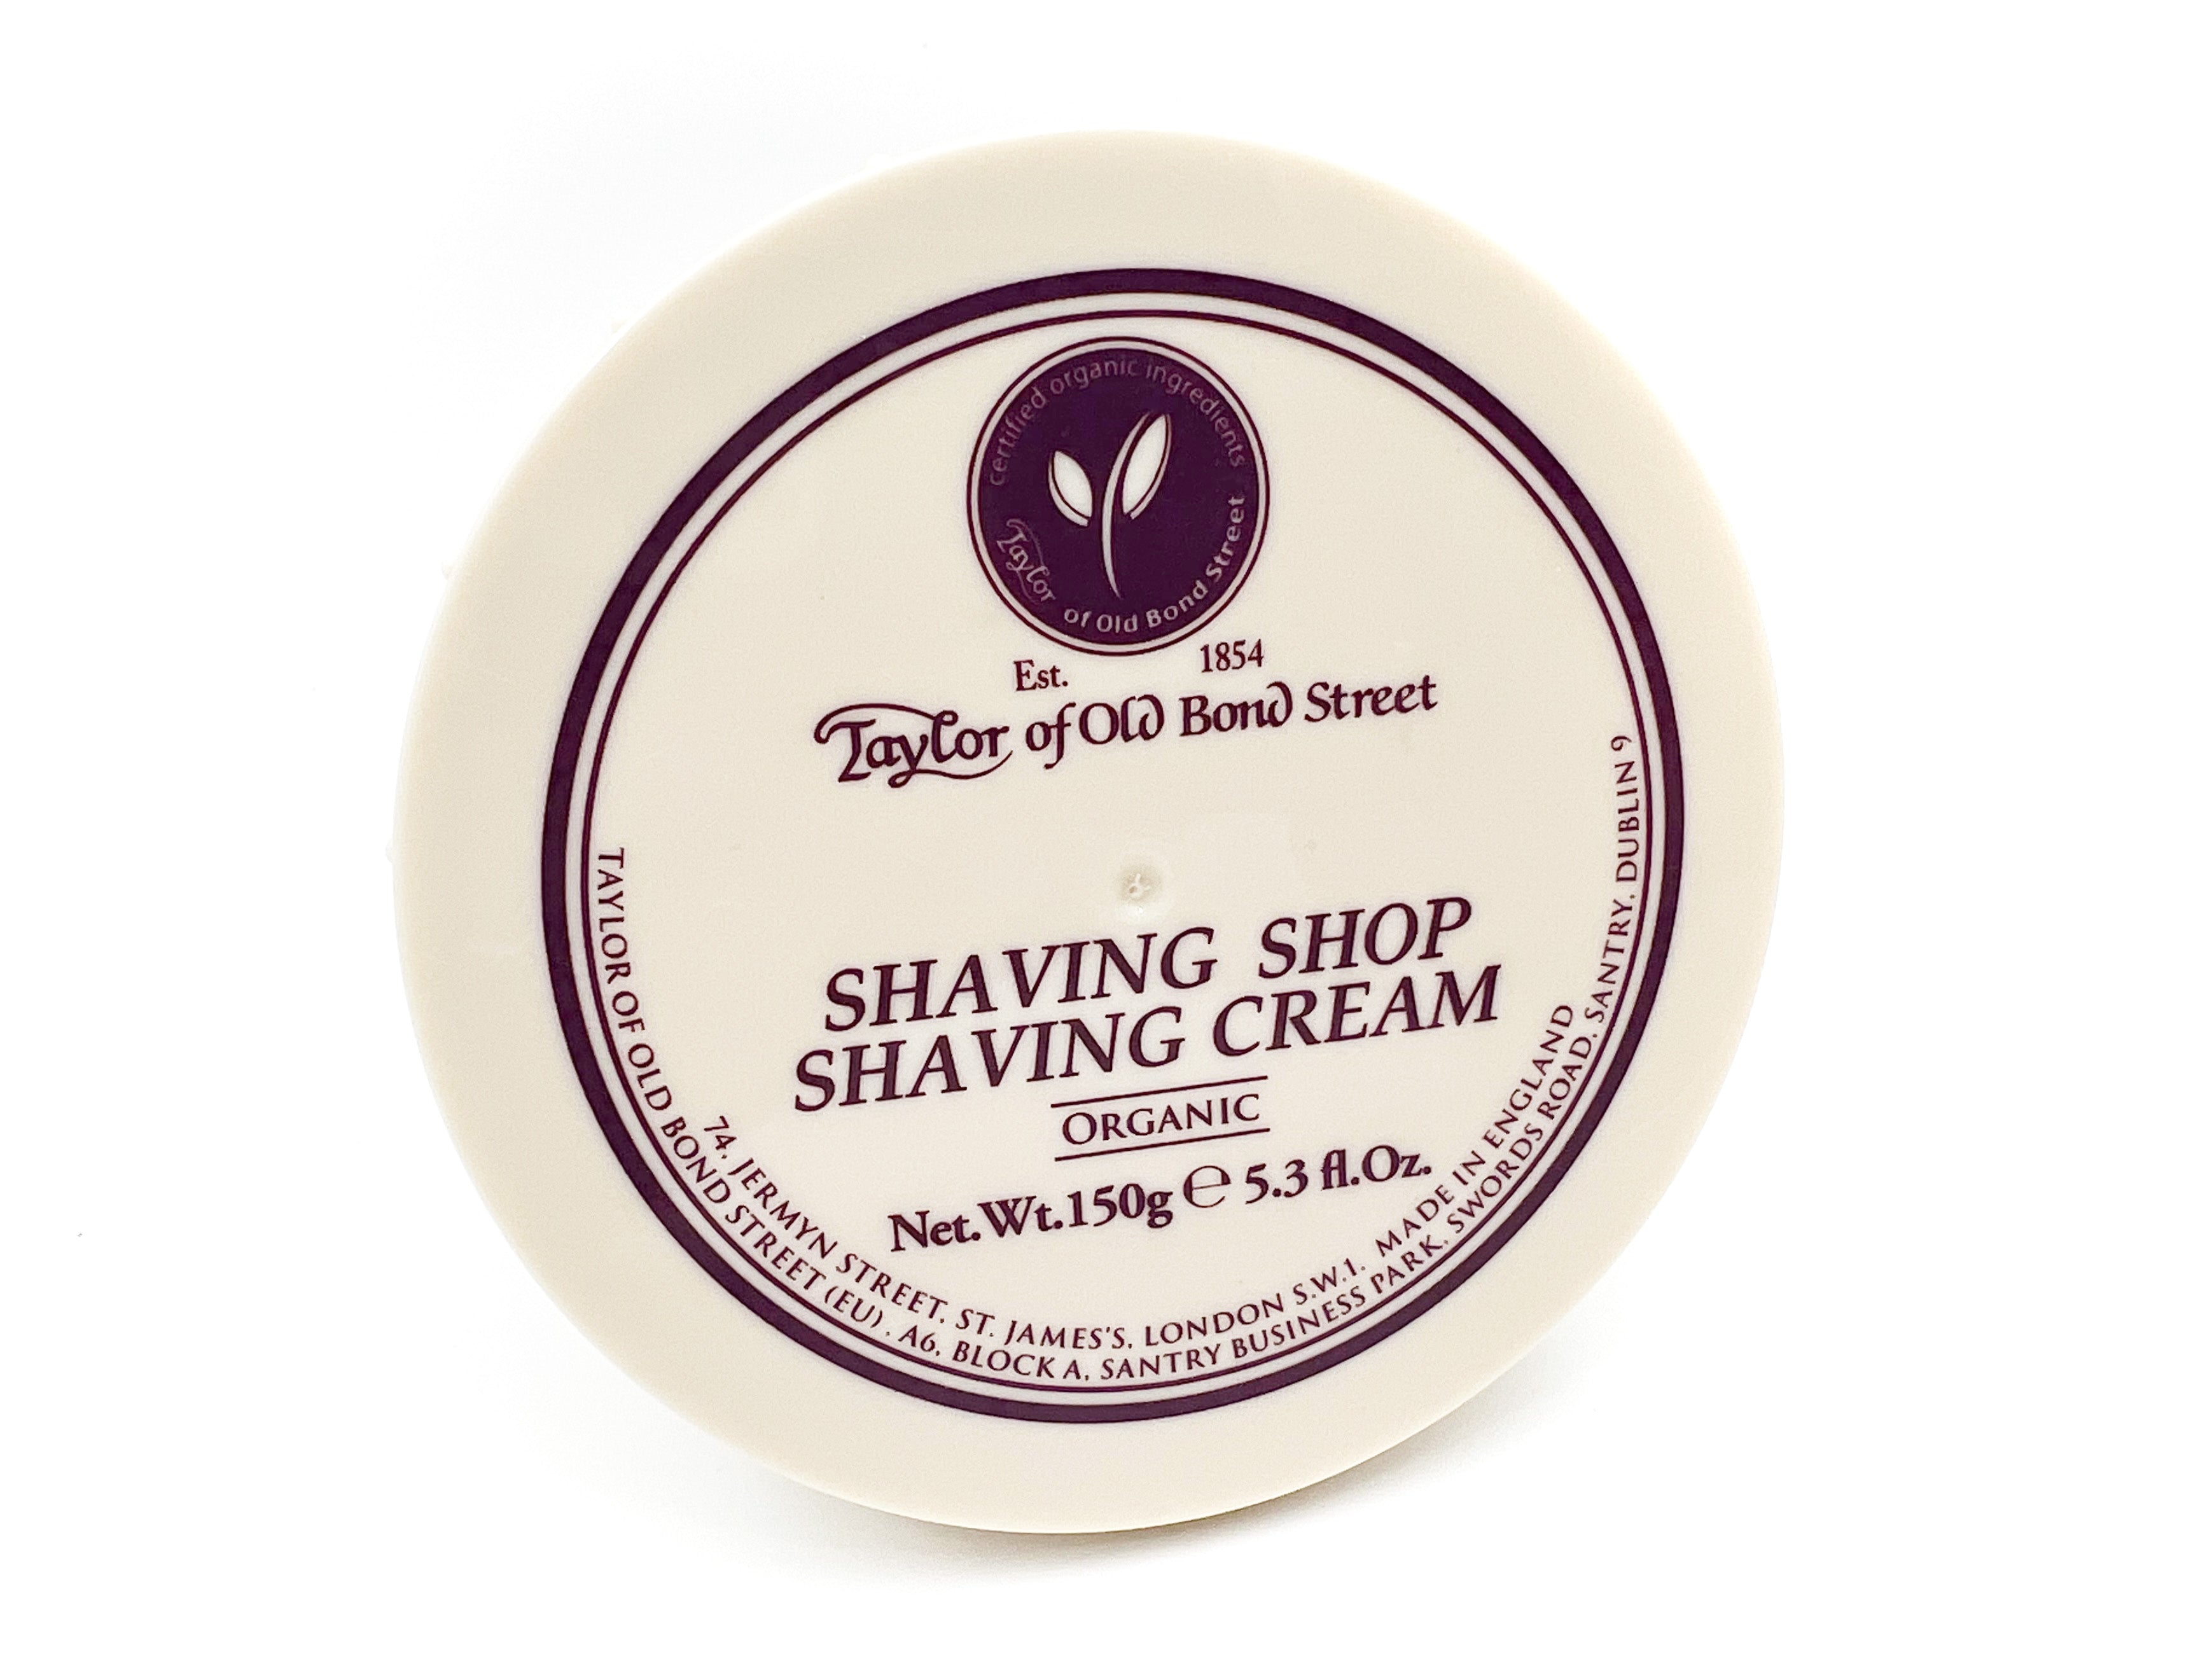 Taylor of Old Bond Street Shaving Shop Organic Shaving Cream Bowl 150g (5.3 oz)